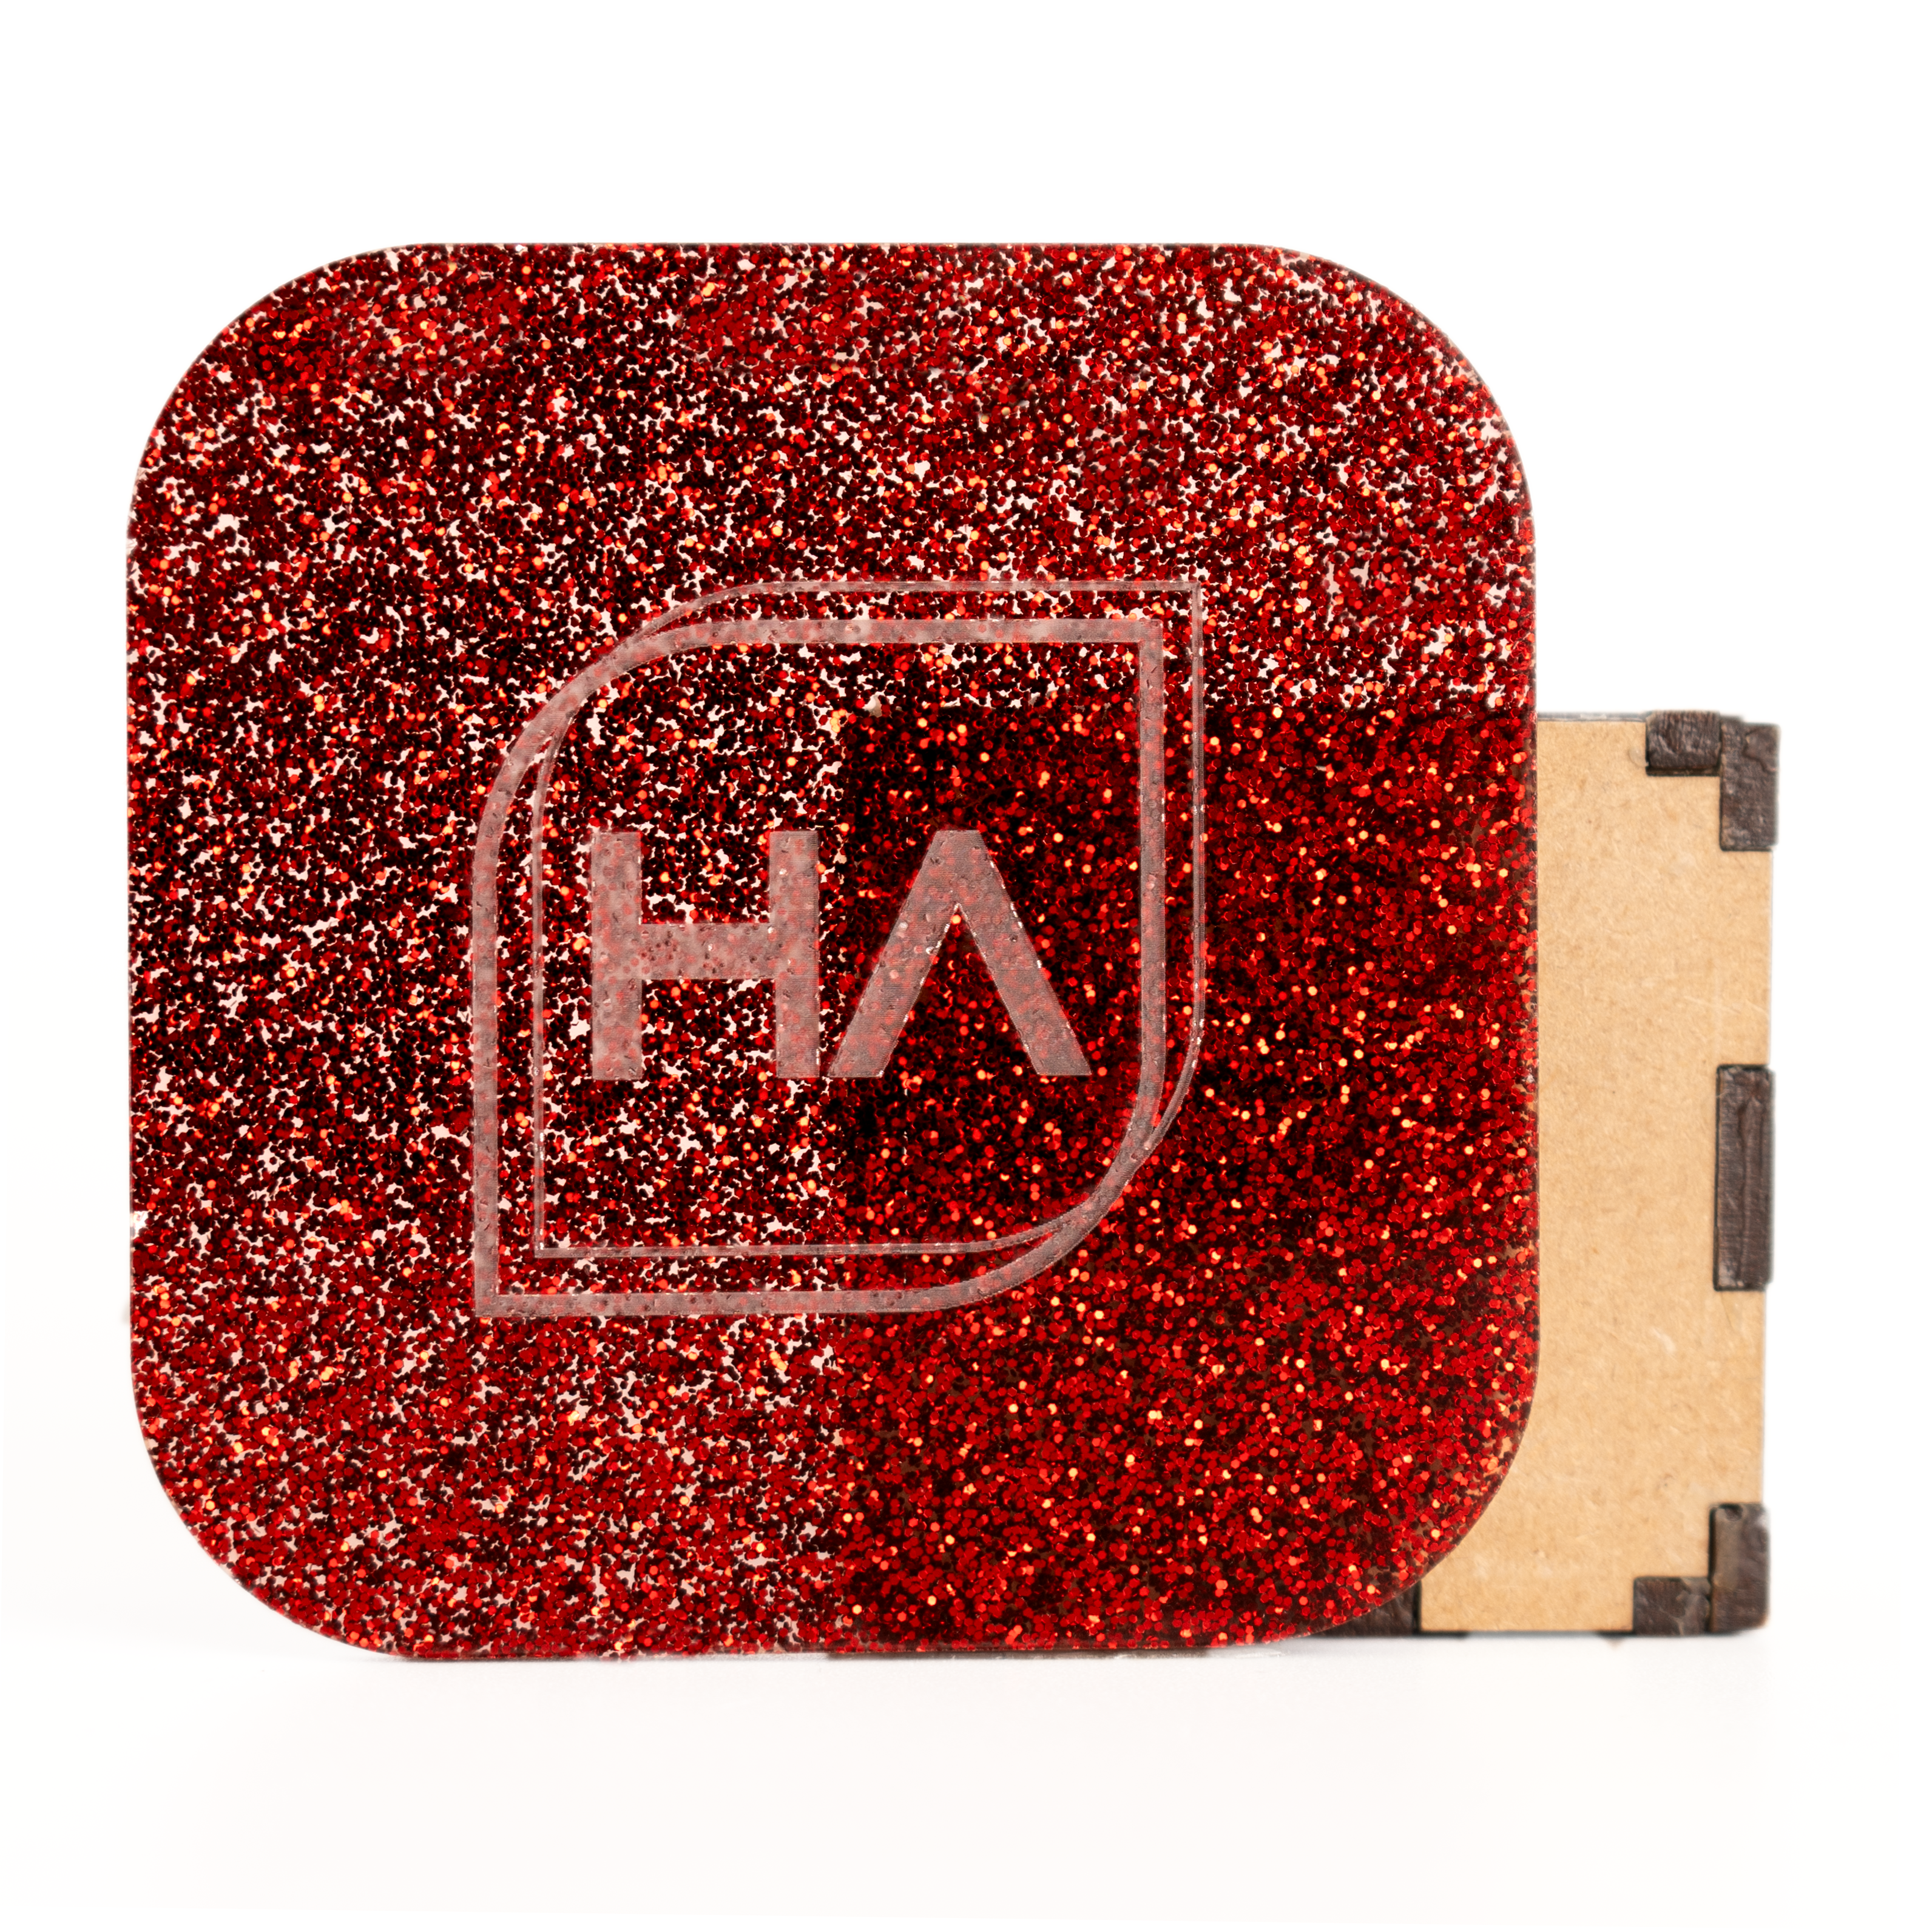 Red Glitter Acrylic, CO2 Laser Glowforge Ready, 3-pack, 1/8th, 12x19, Ruby  Slippers Glitter Cast Acrylic, Craft Closet Brand 